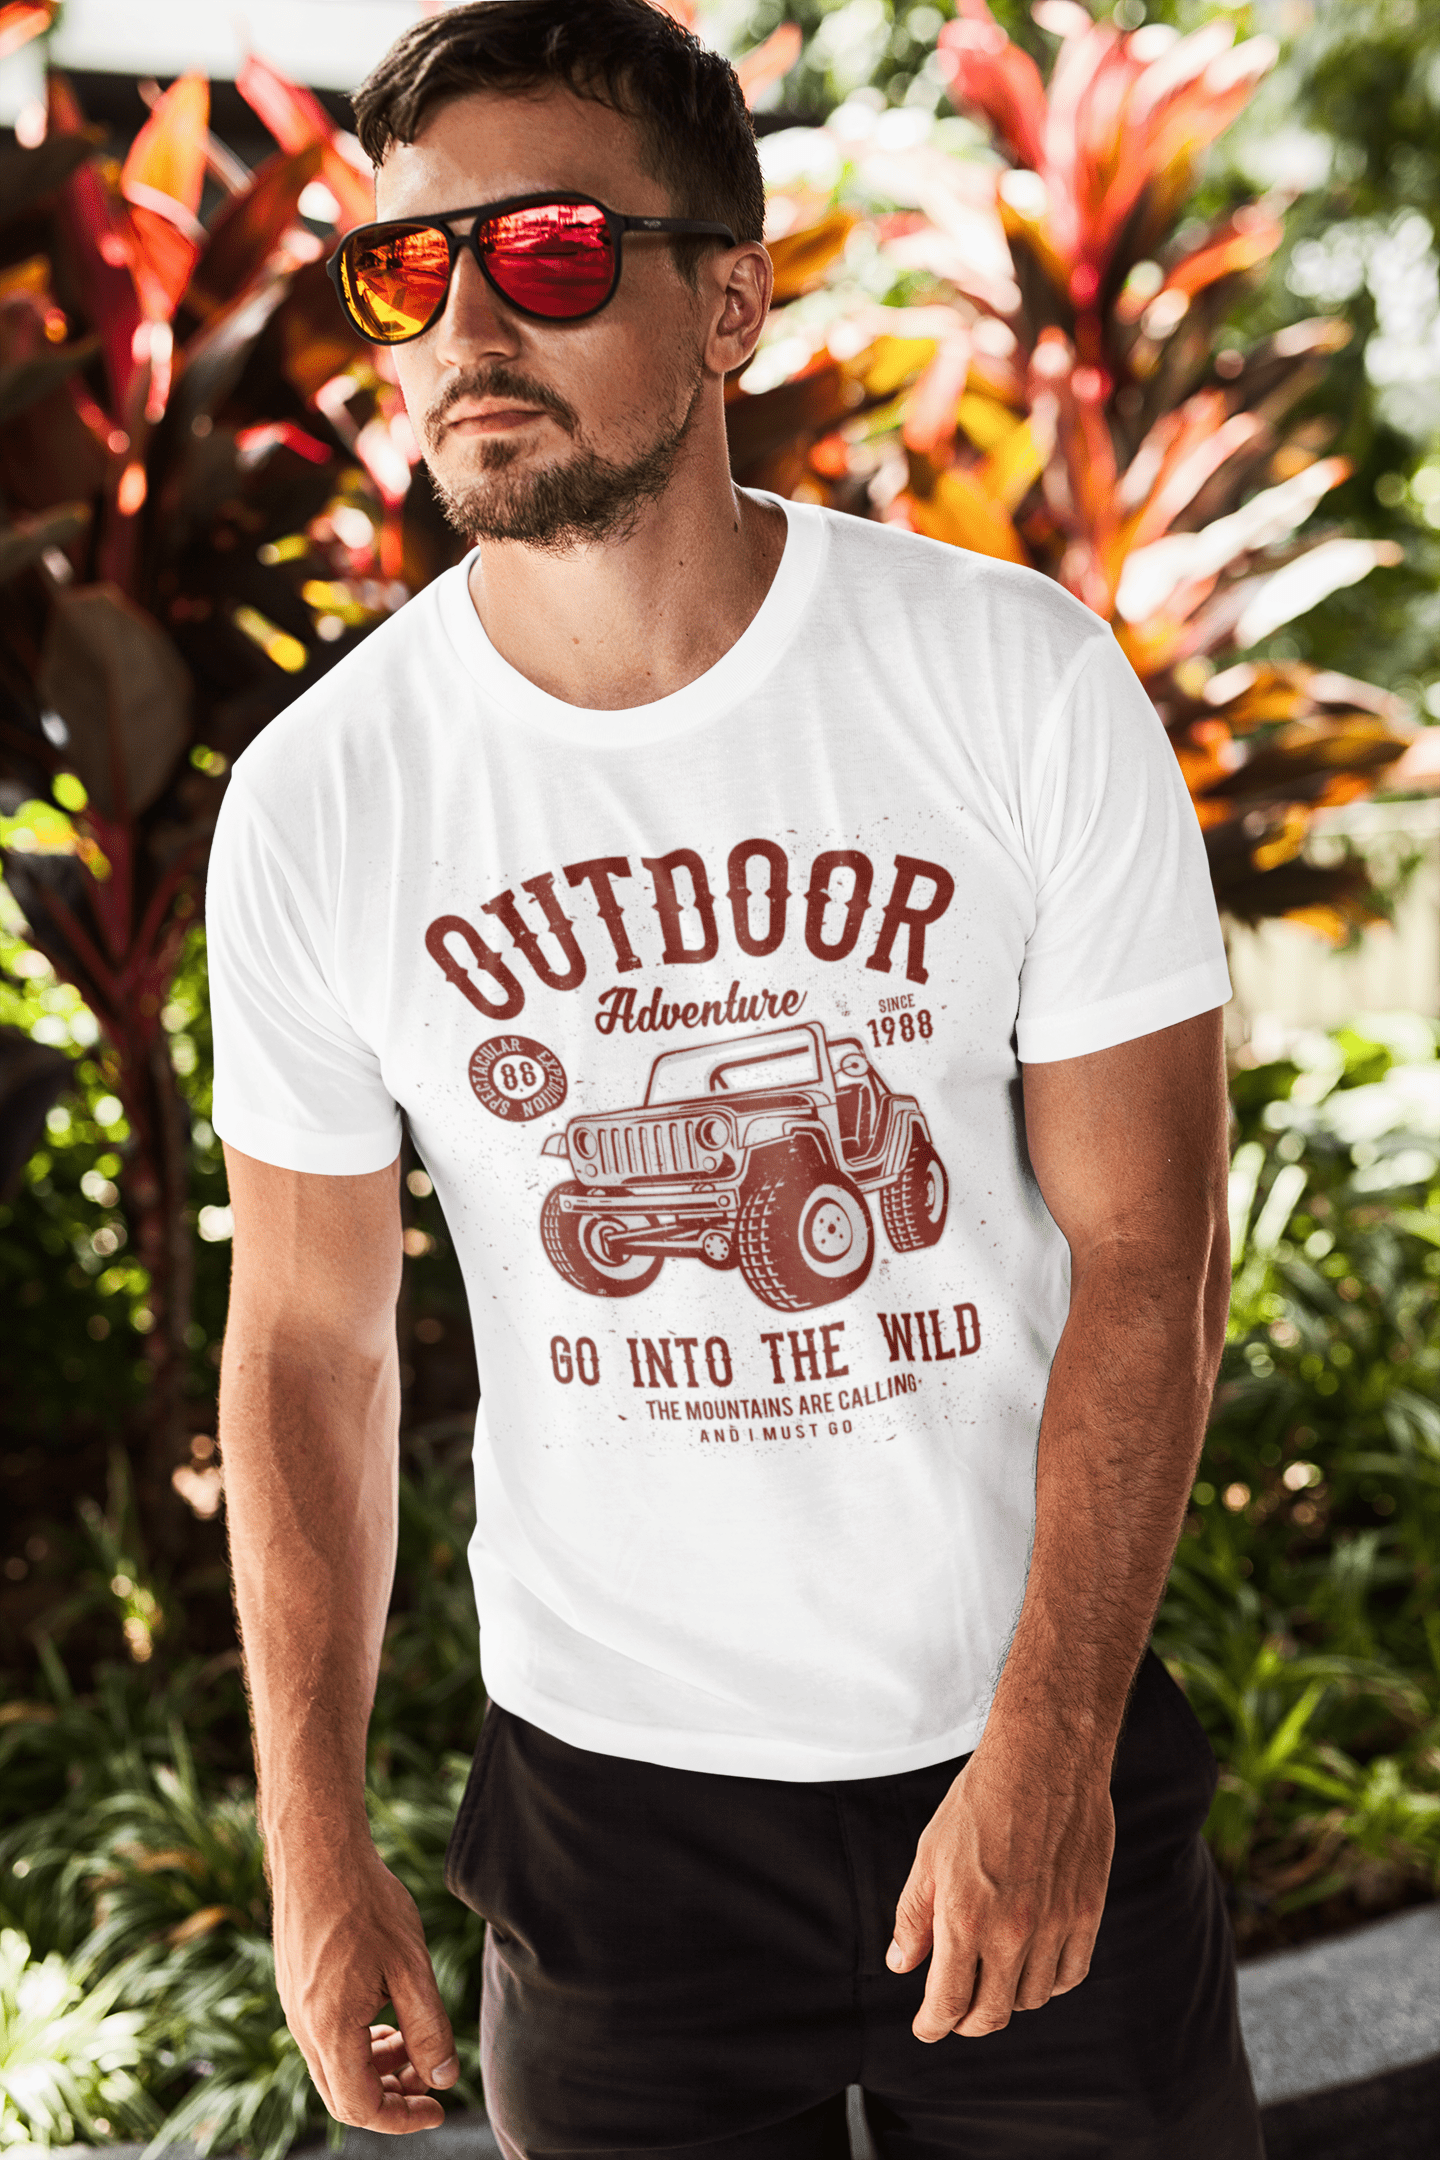 ULTRABASIC Herren T-Shirt Outdoor Adventure Since 1988 – Mountains are Calling Wild T-Shirt